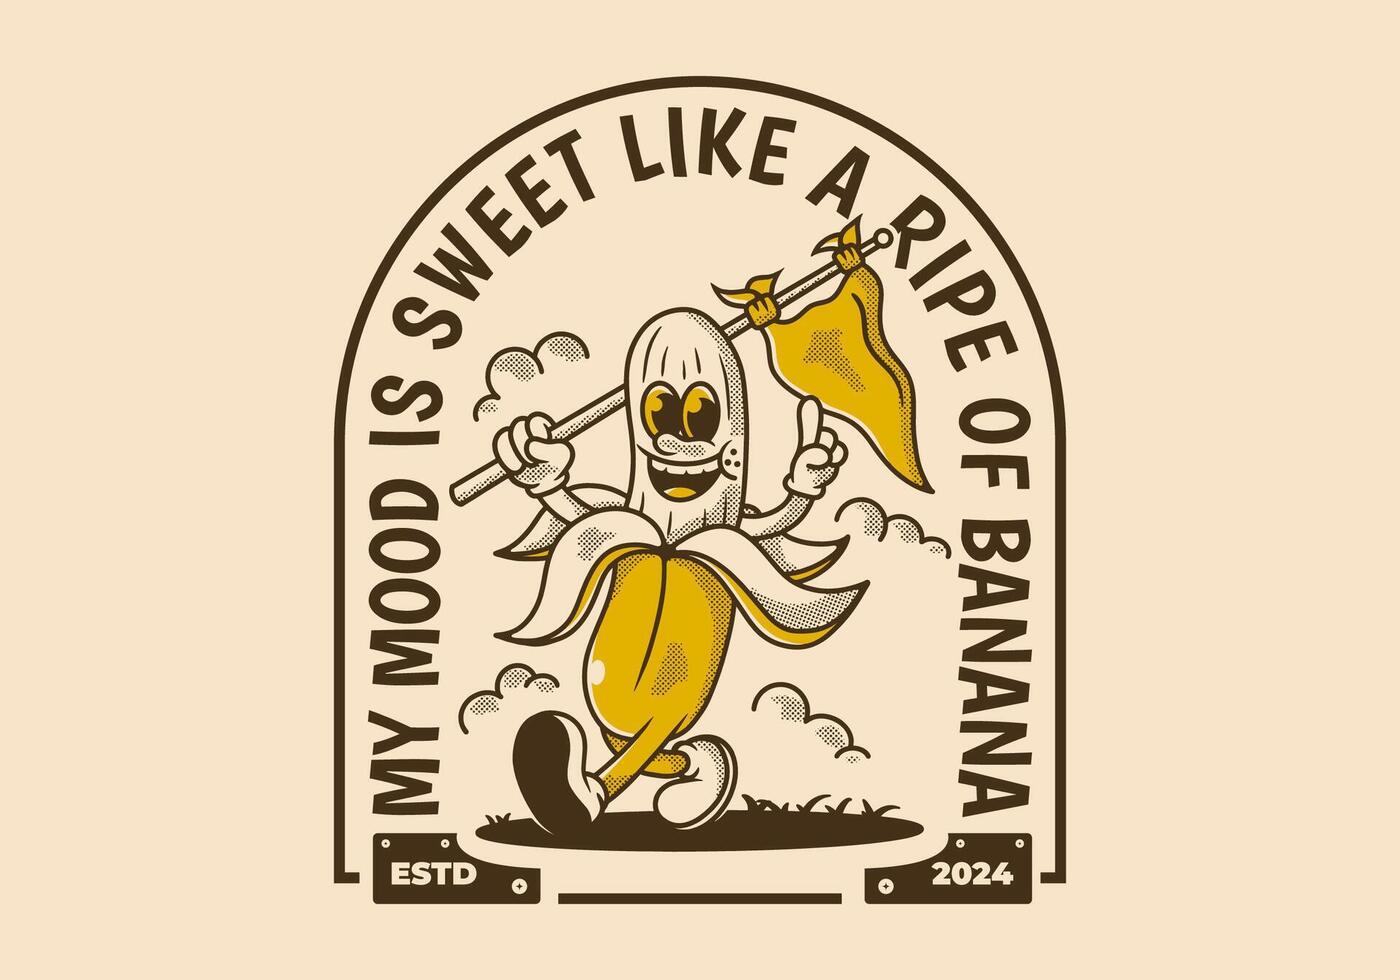 My mood is sweet, like a ripe of banana. Character of walking banana holding a triangle flag vector